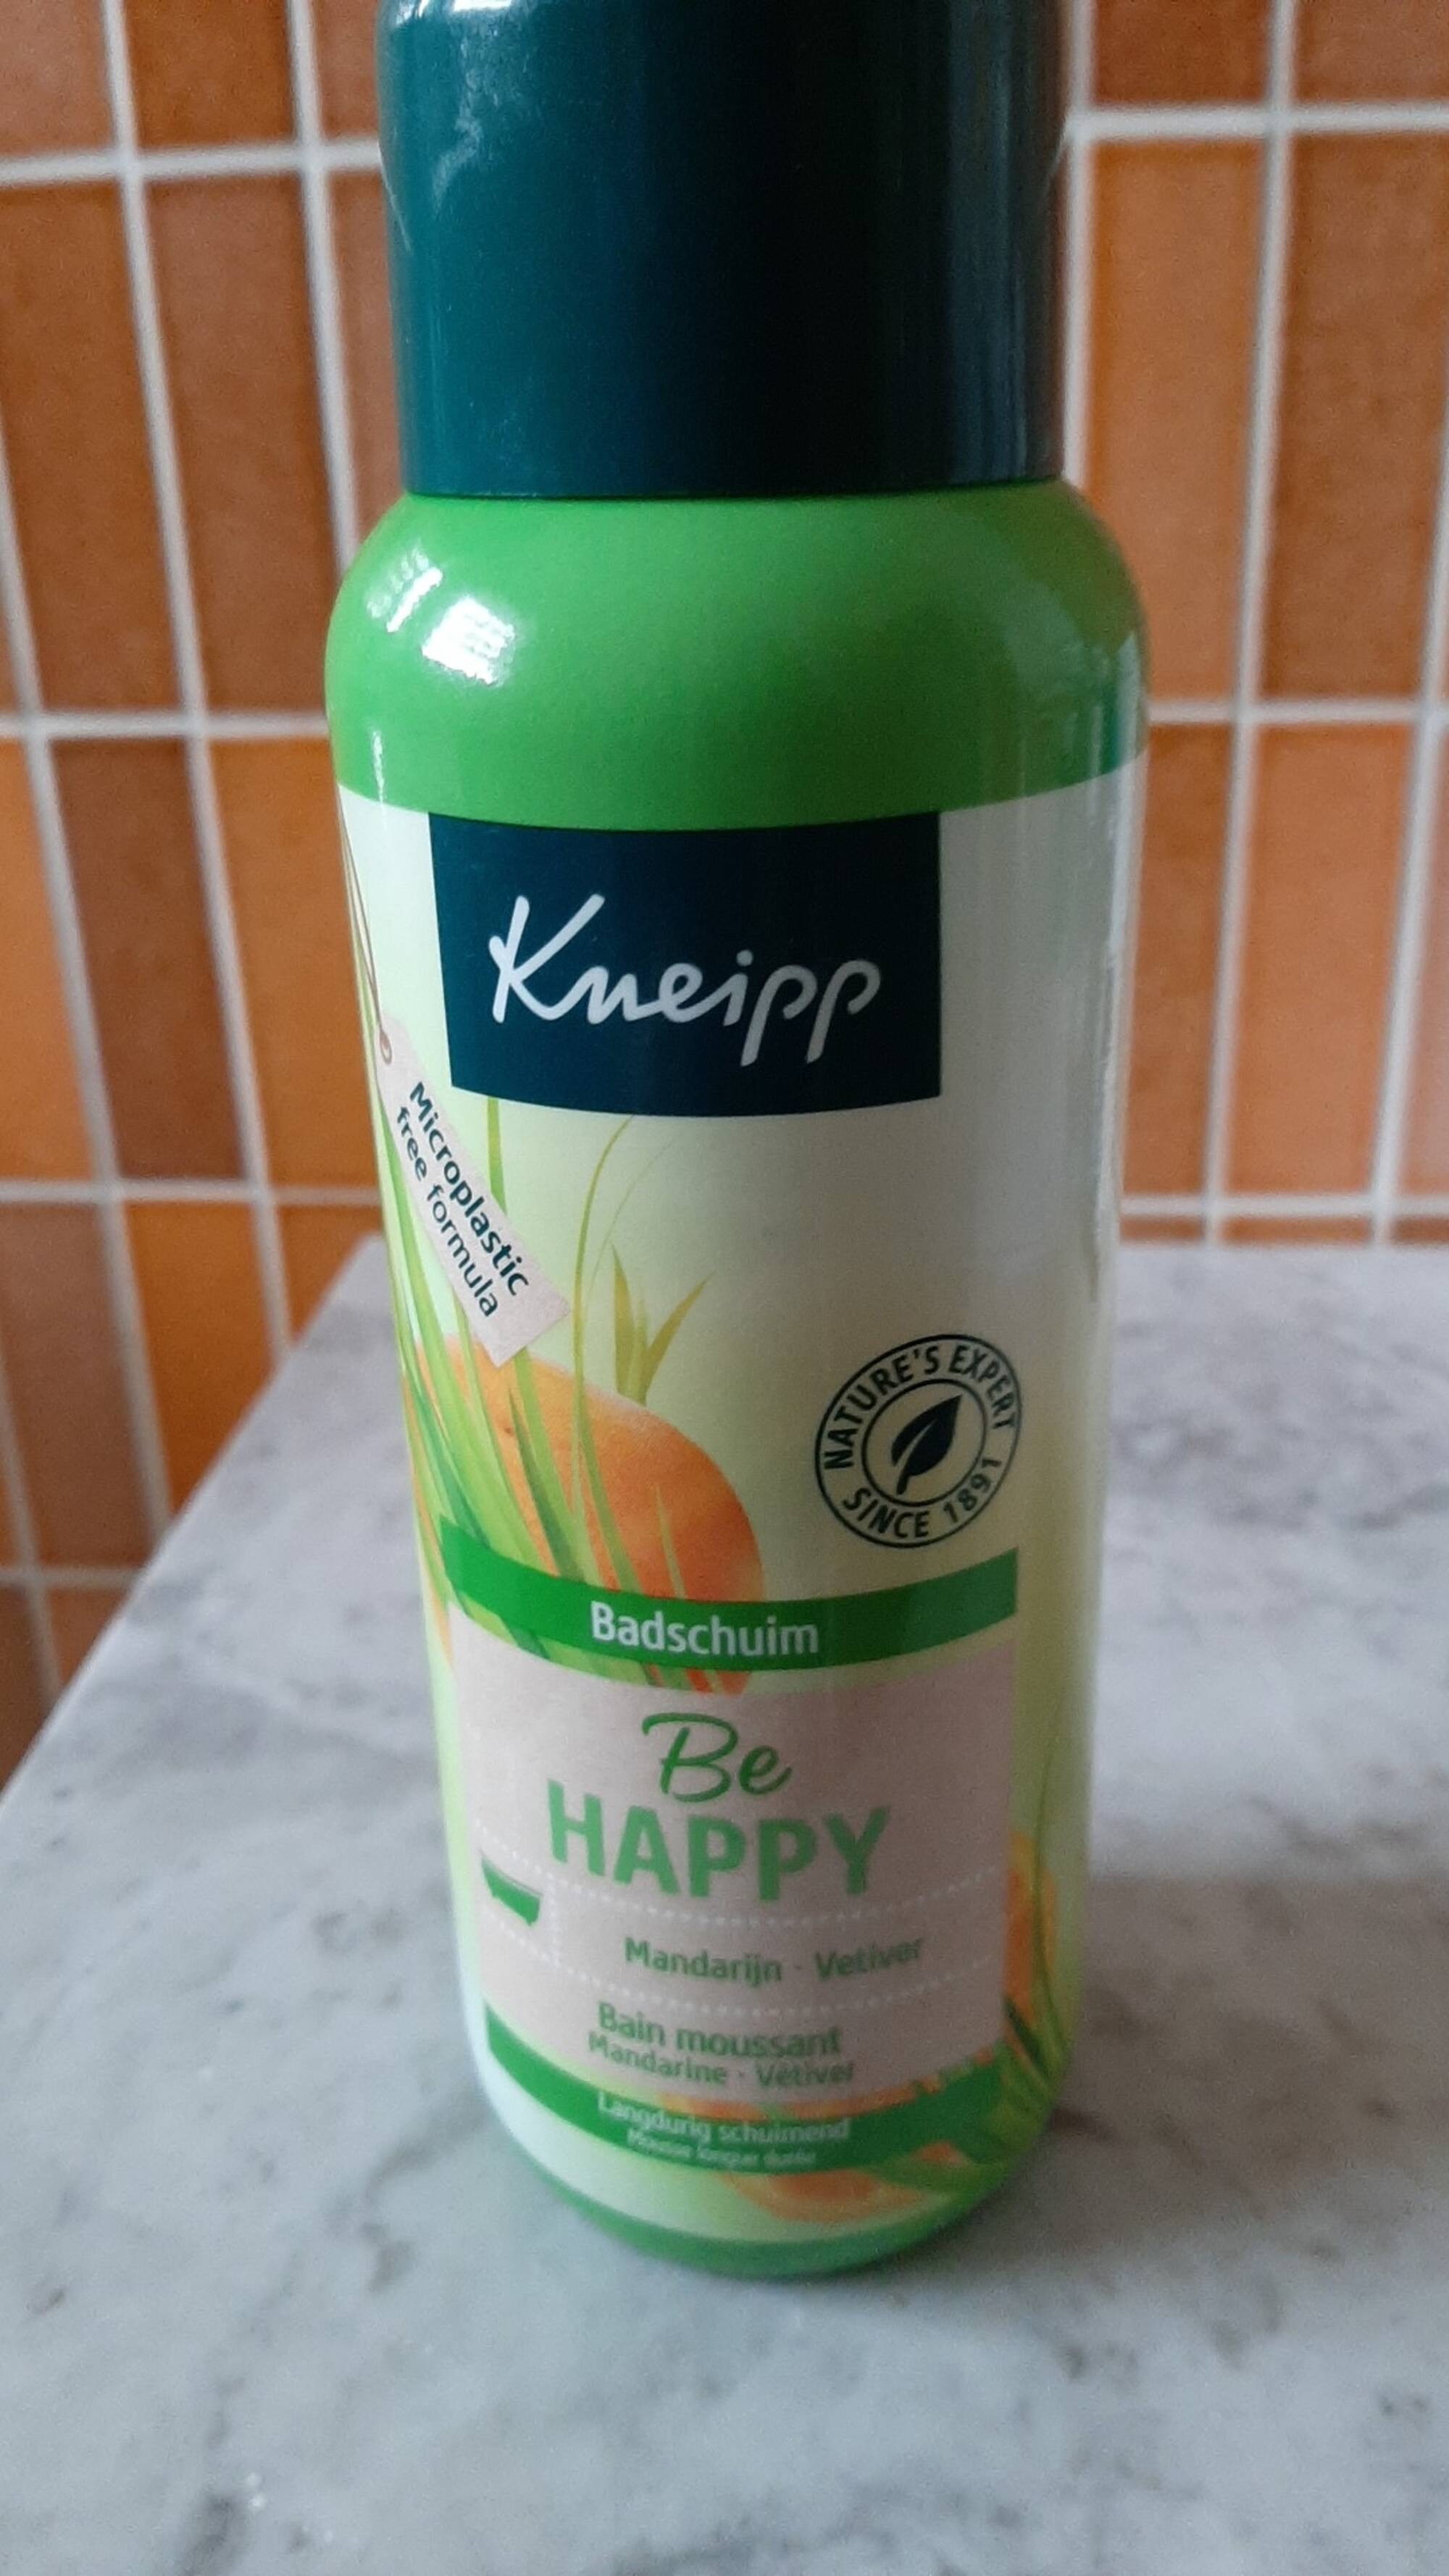 KNEIPP - Be Happy - Bain moussant mandarine vetiver